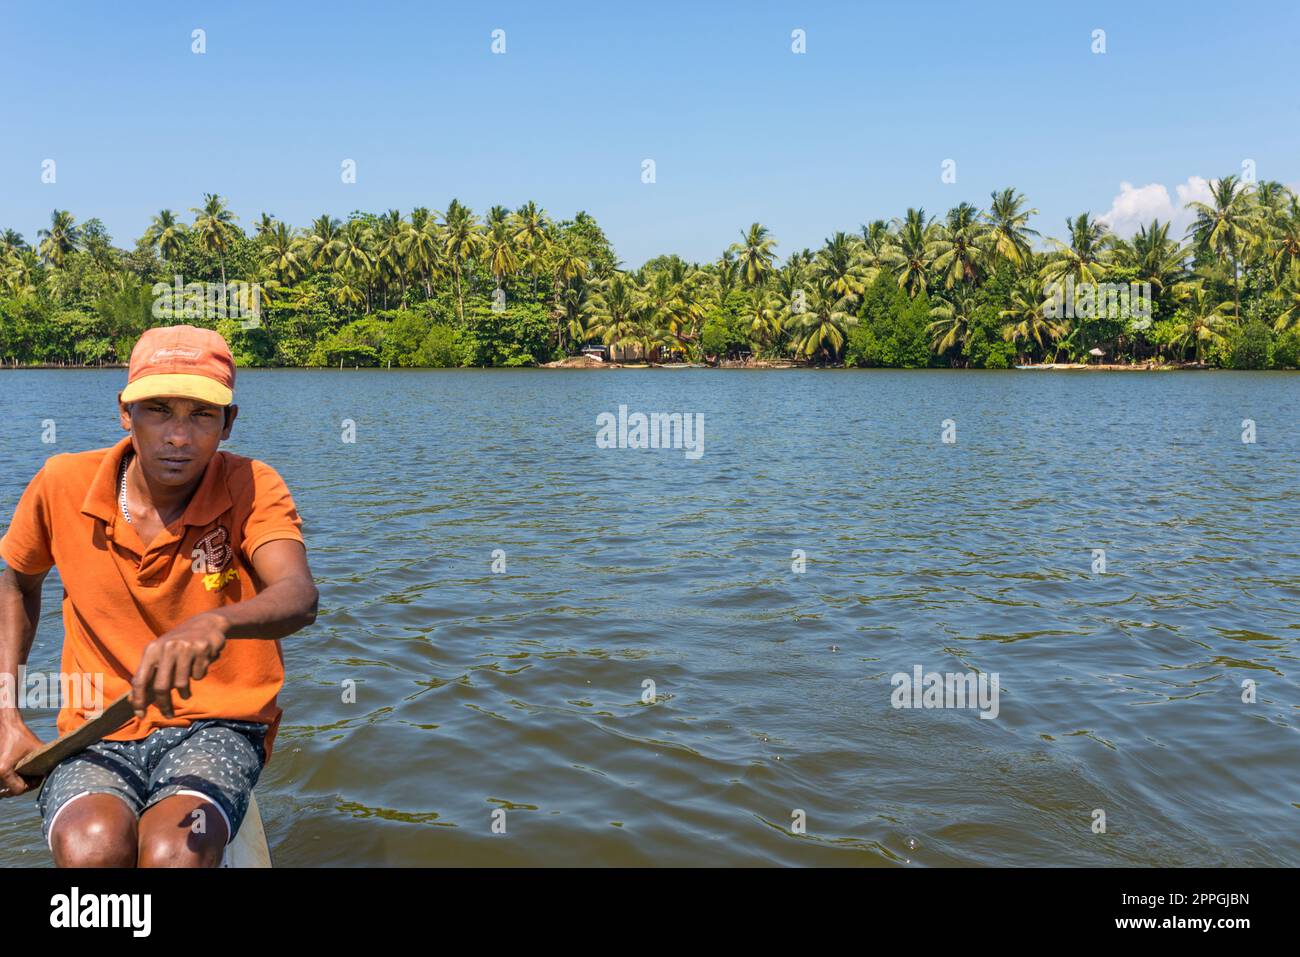 The Hikkaduwa Lake in the north-east of the same touristy town Hikkaduwa in Sri Lanka Stock Photo